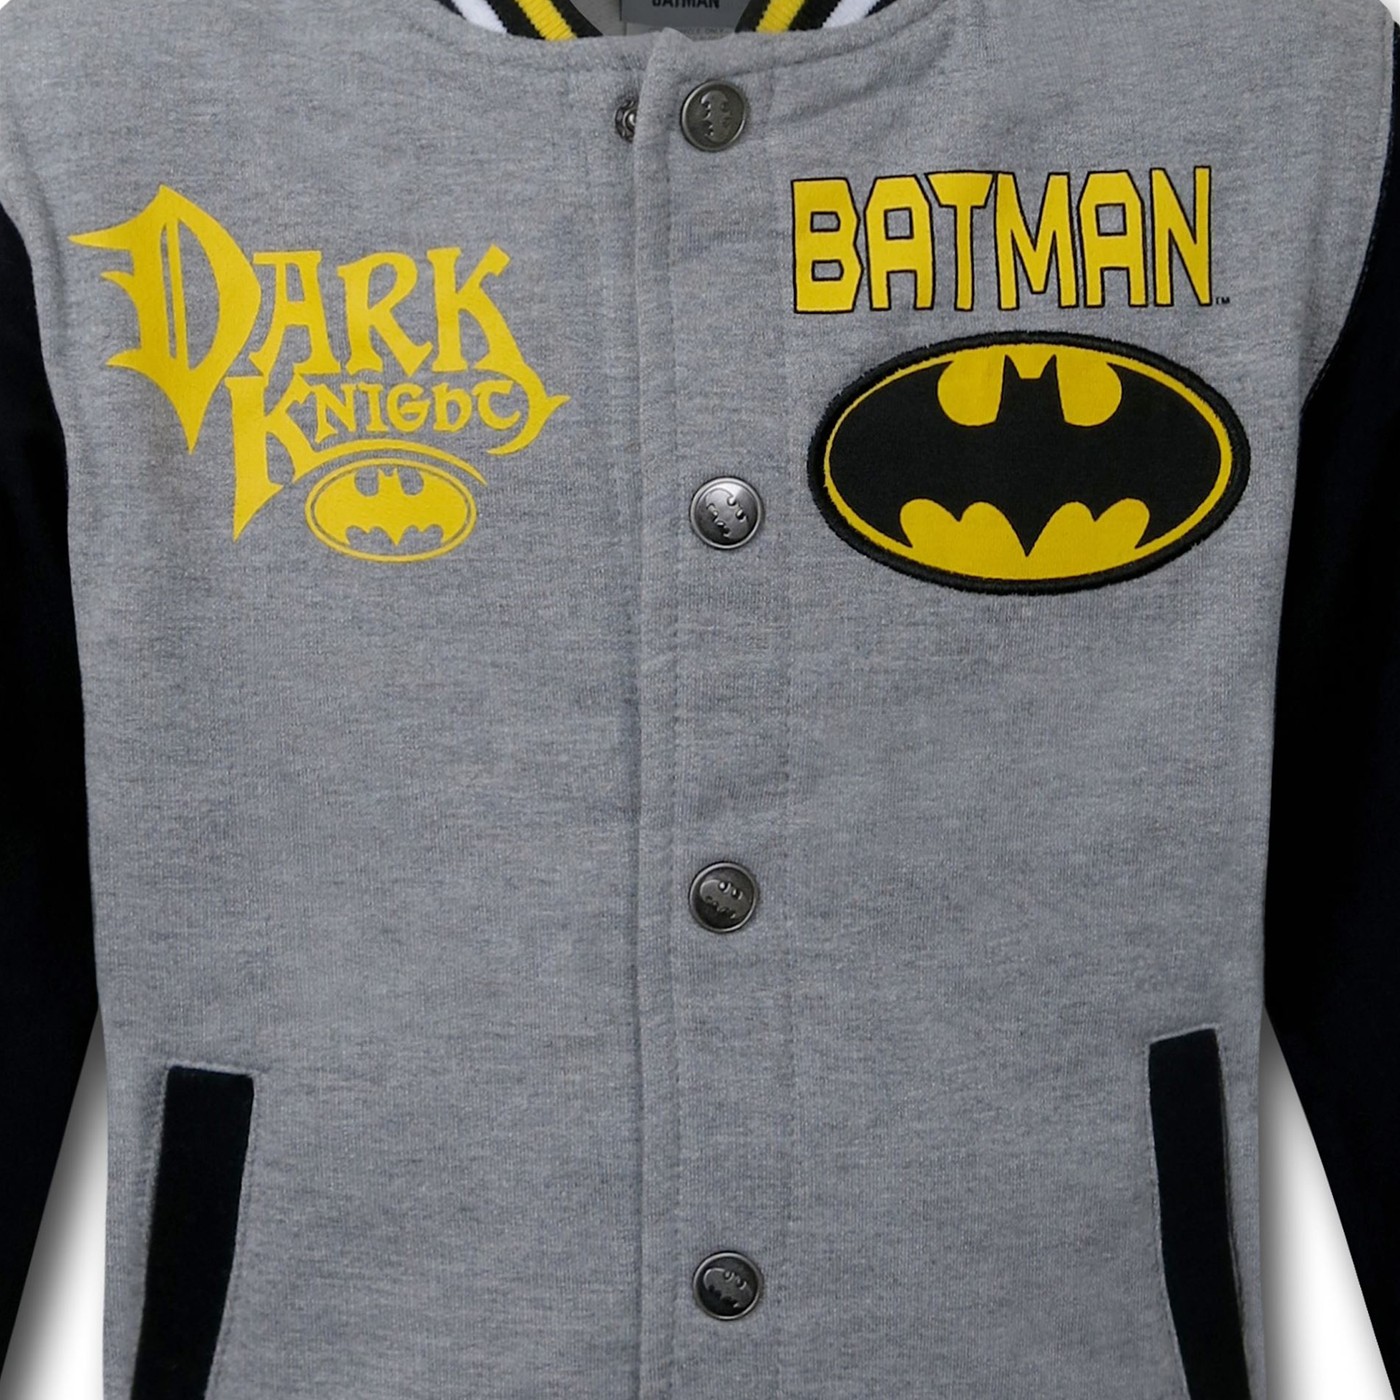 Batman Kids Stadium Jacket